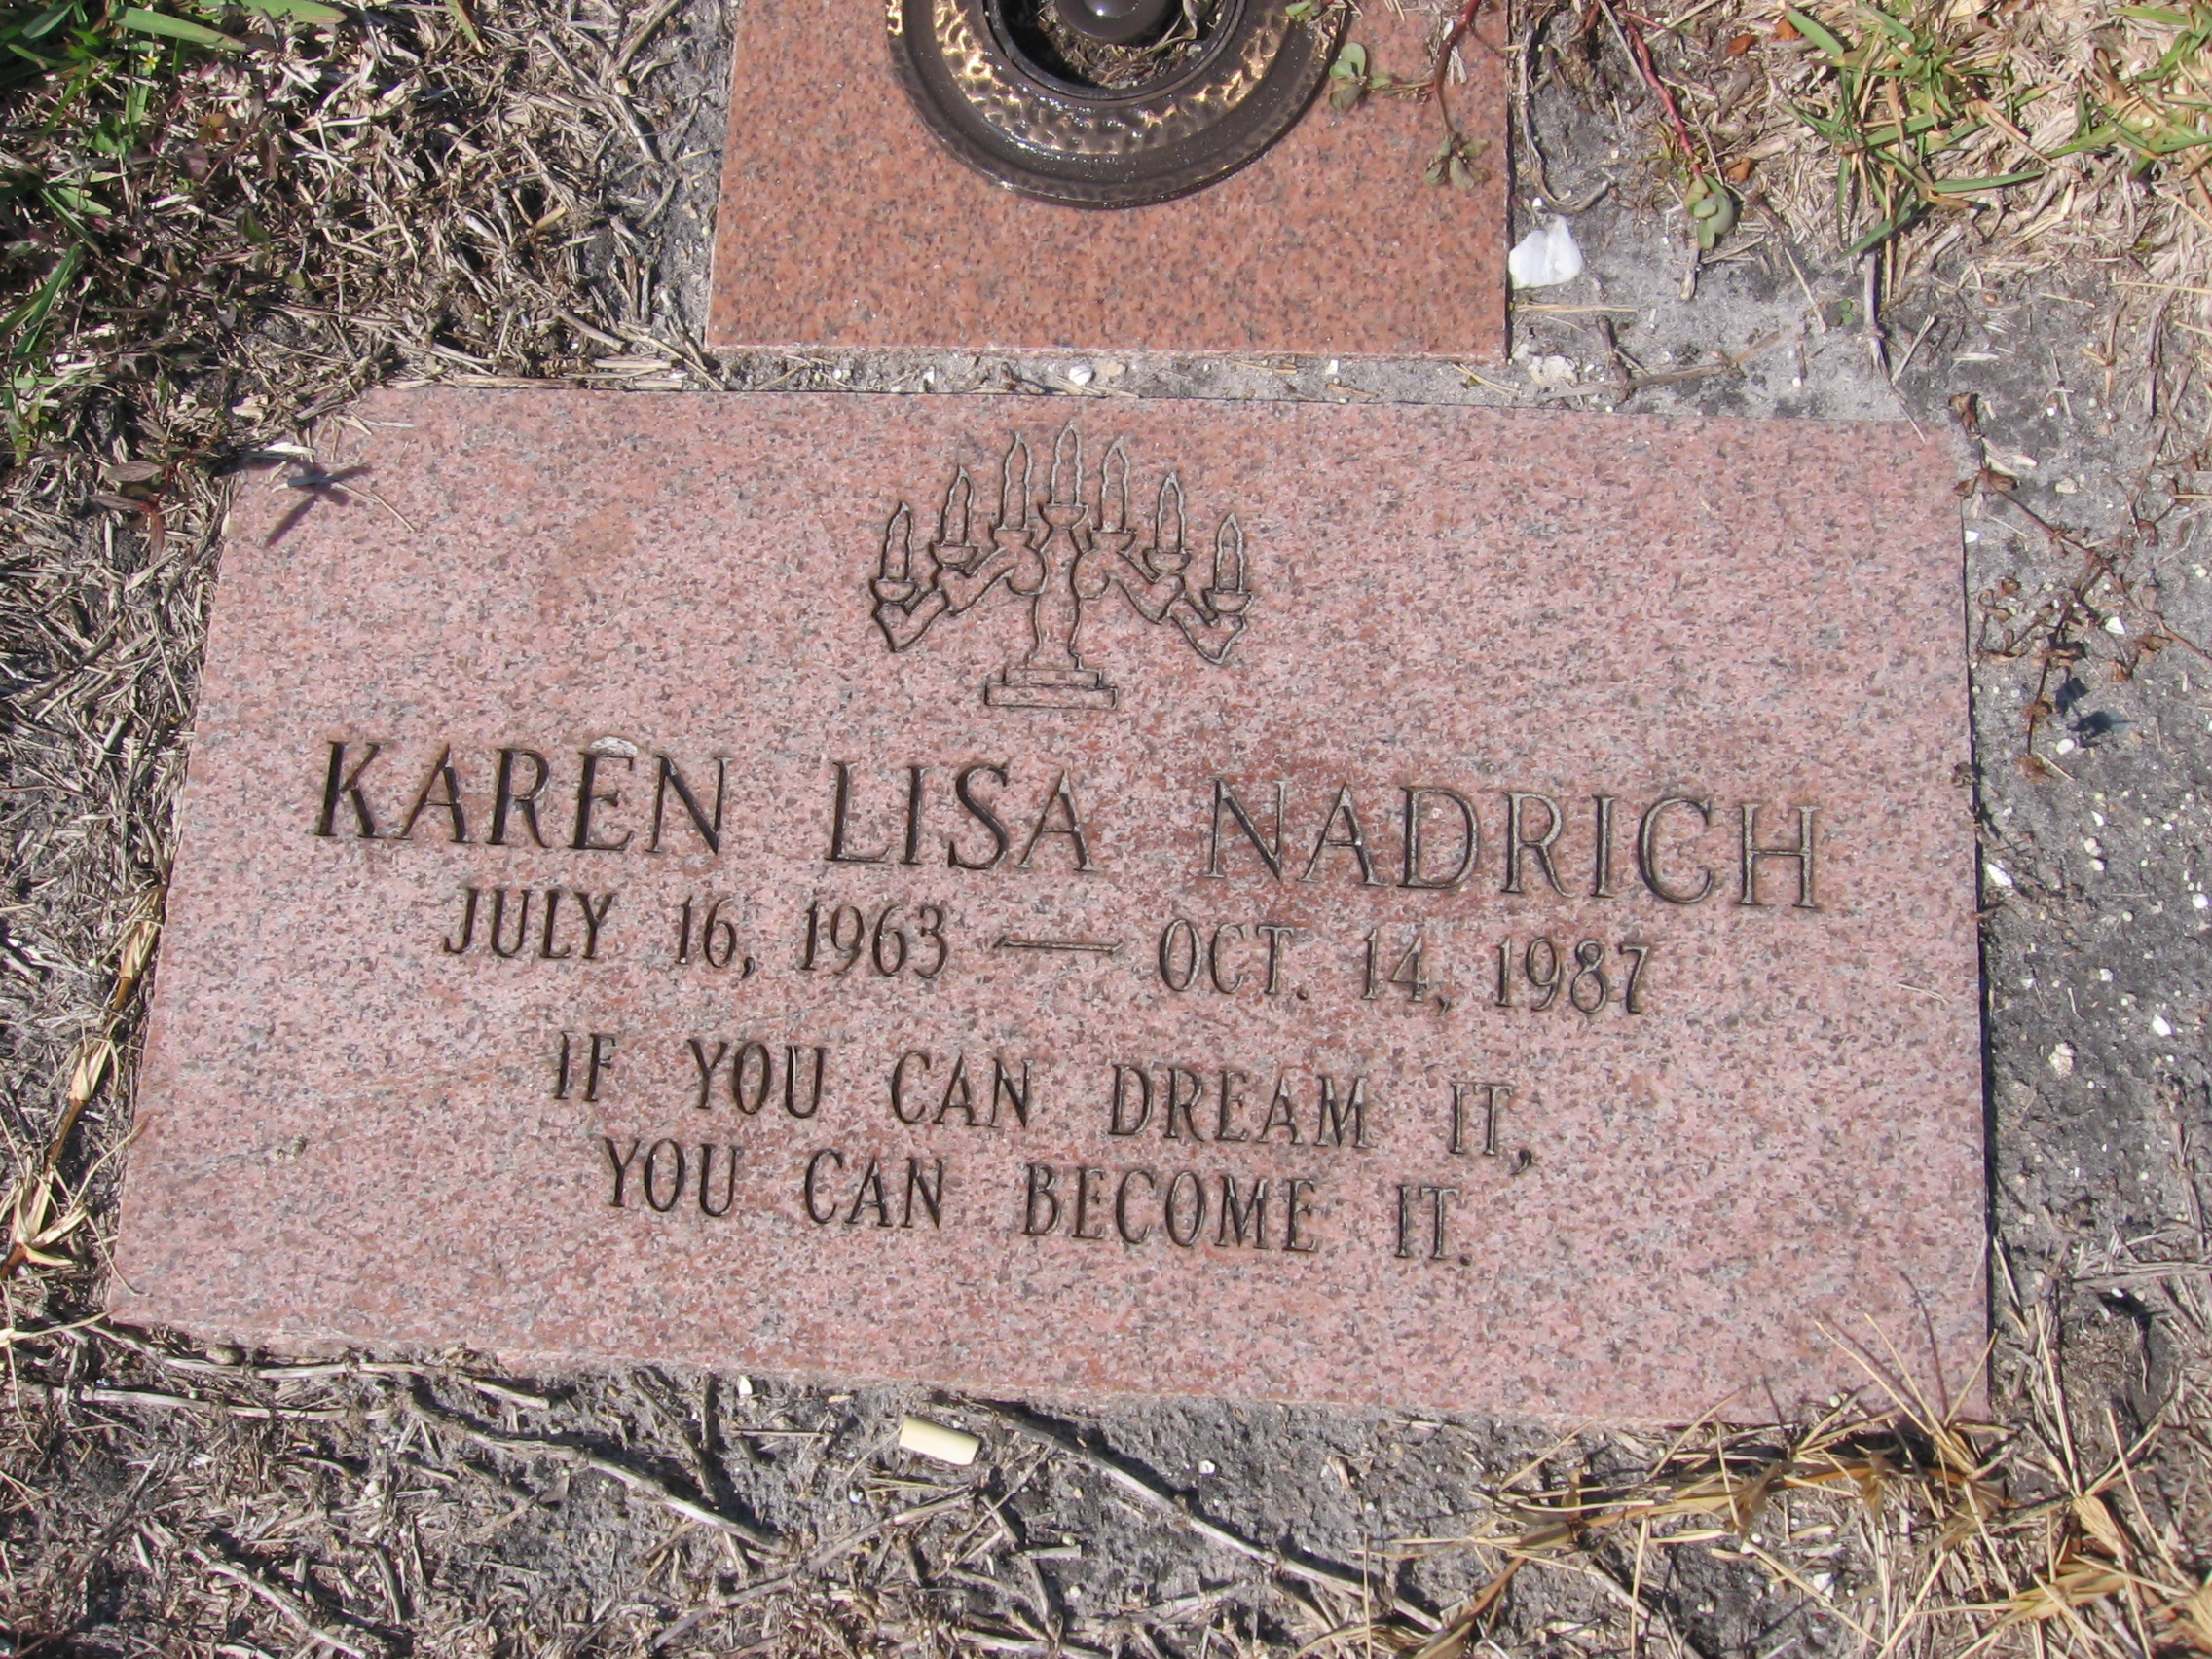 Karen Lisa Nadrich